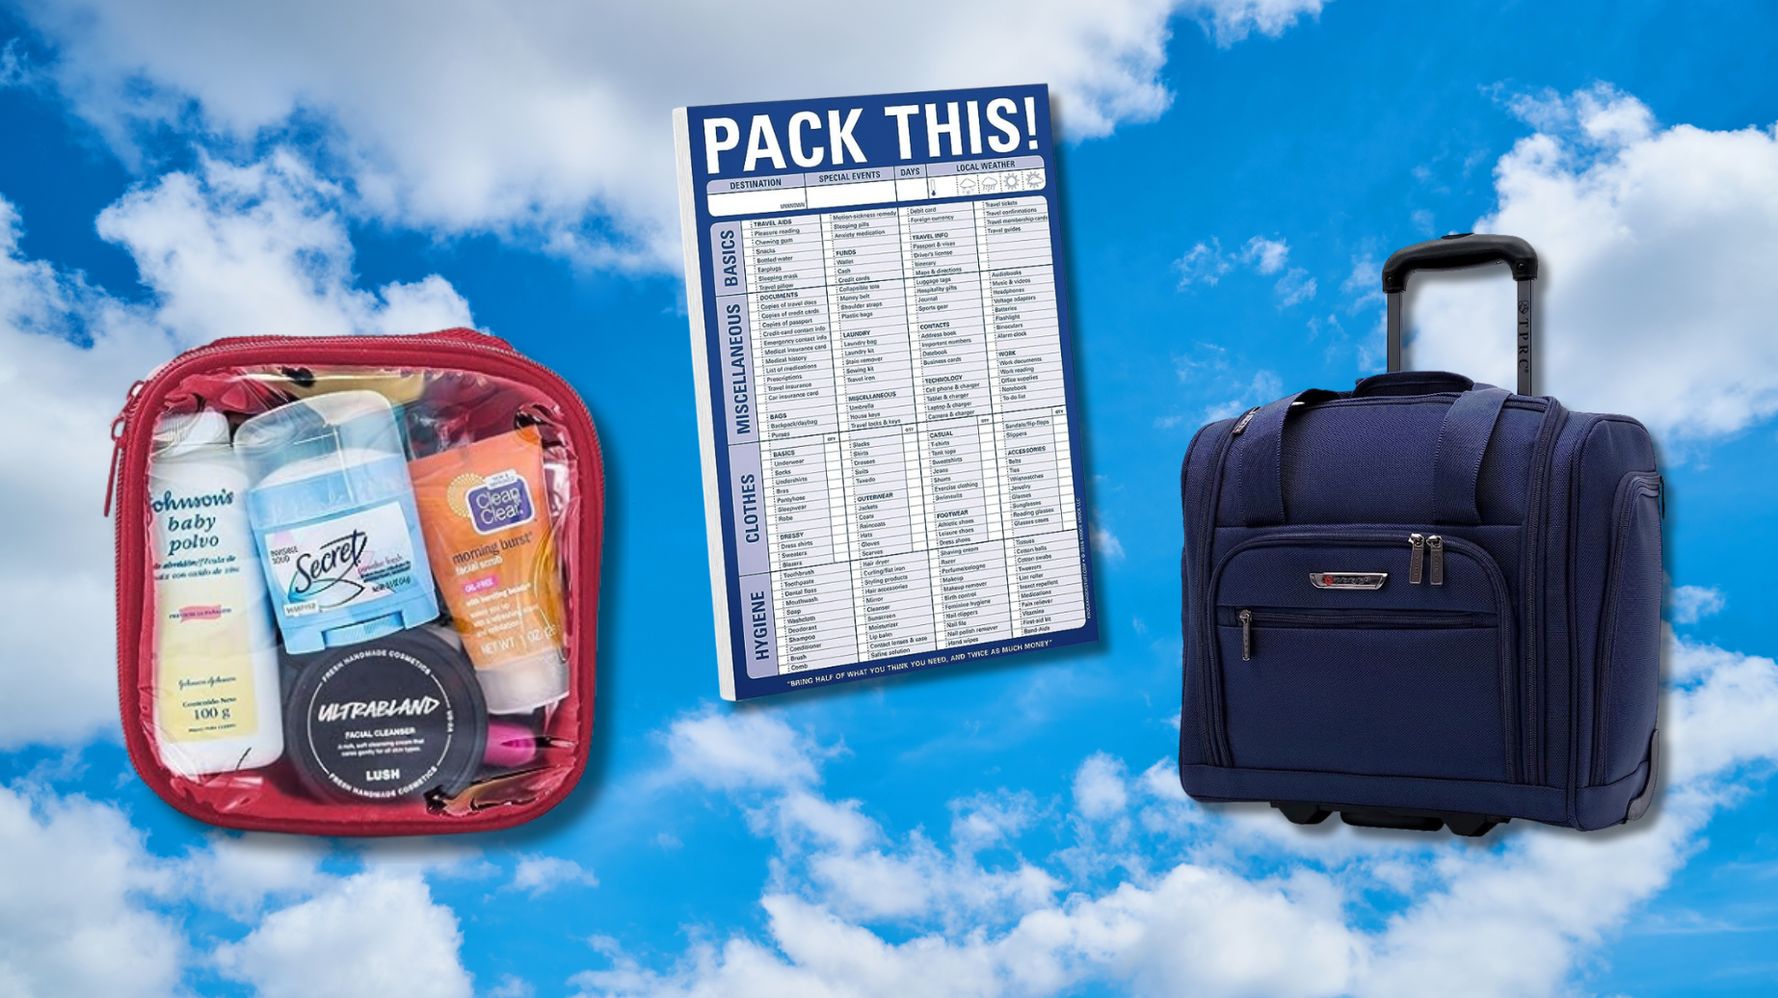 Travel Insert Fluffy Suede Organizer Bag Handbag Portable Cosmetic